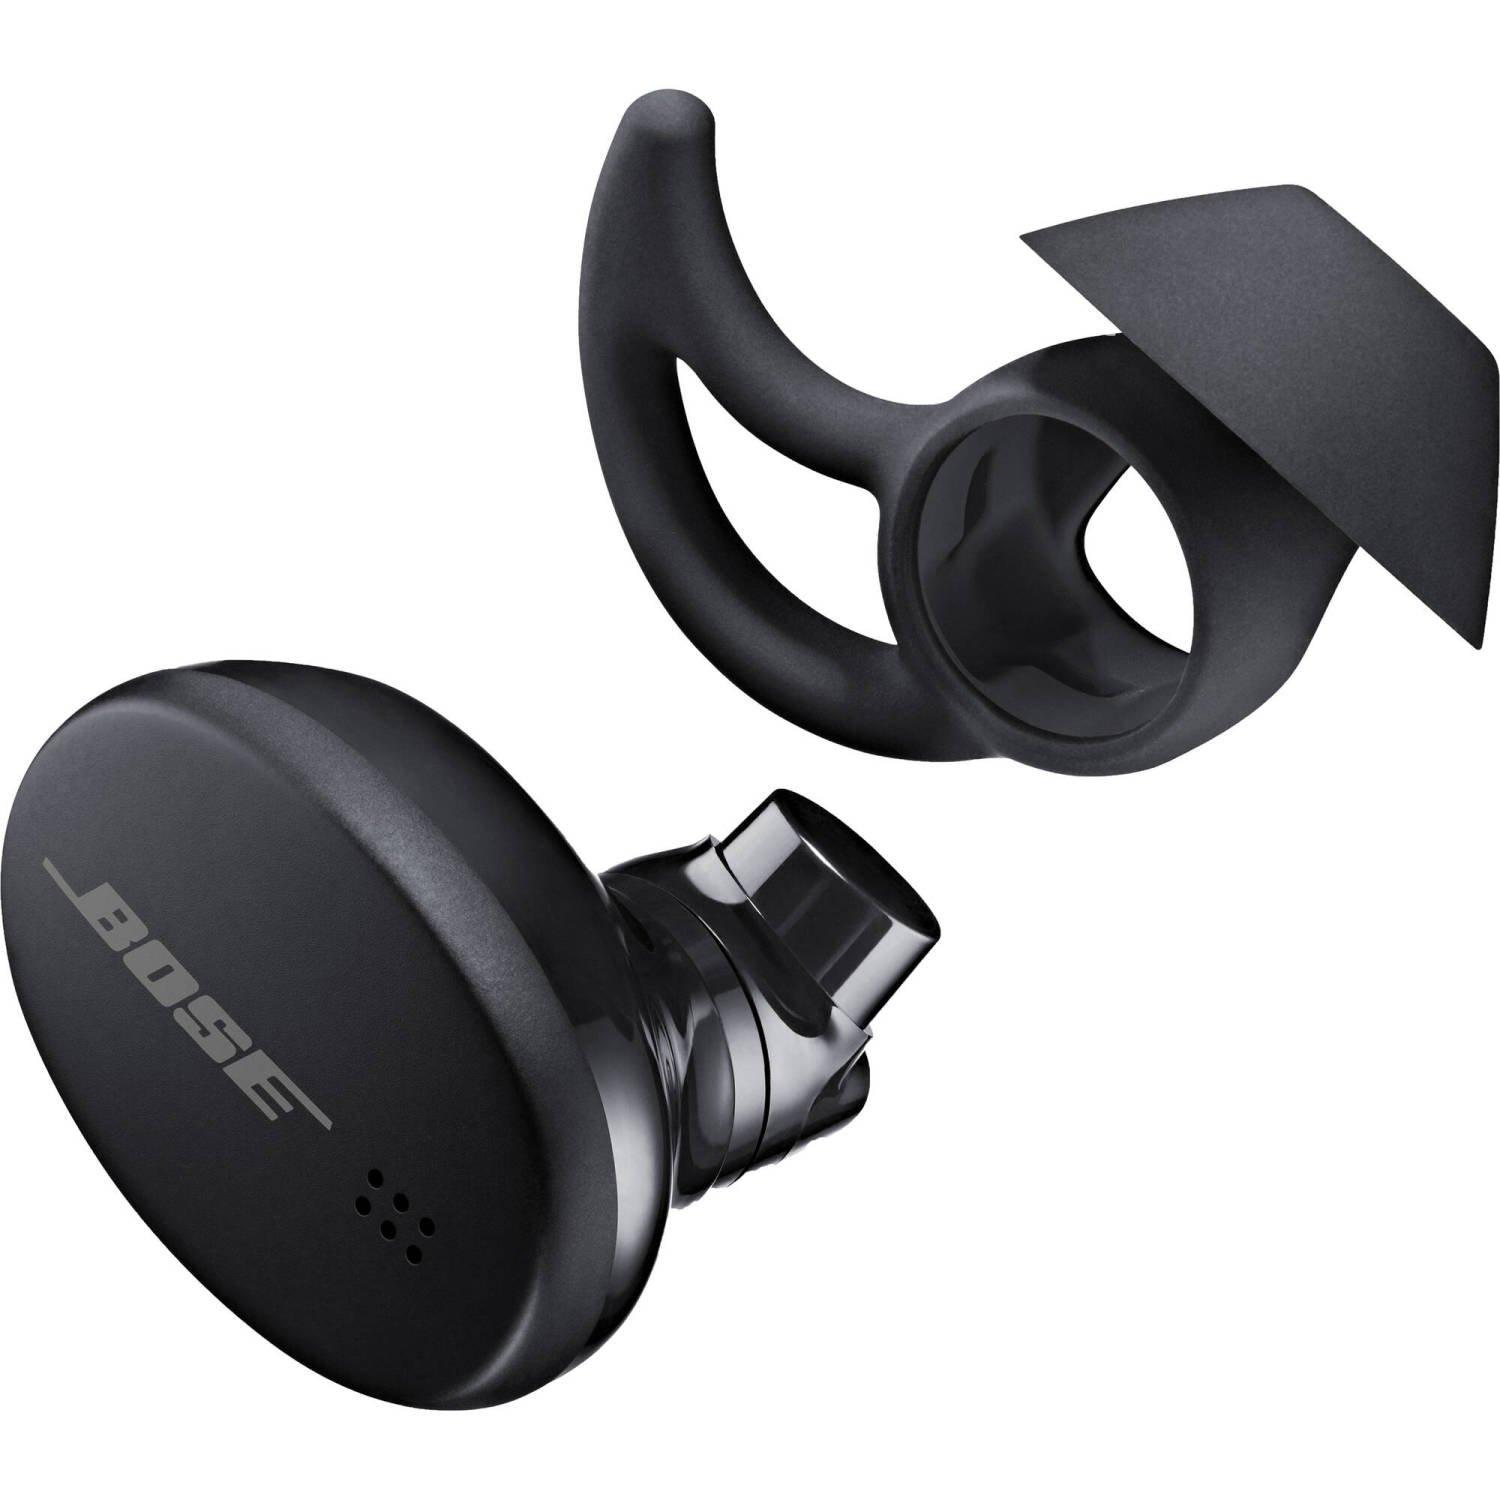 Bose Sport Earbuds | GameStop